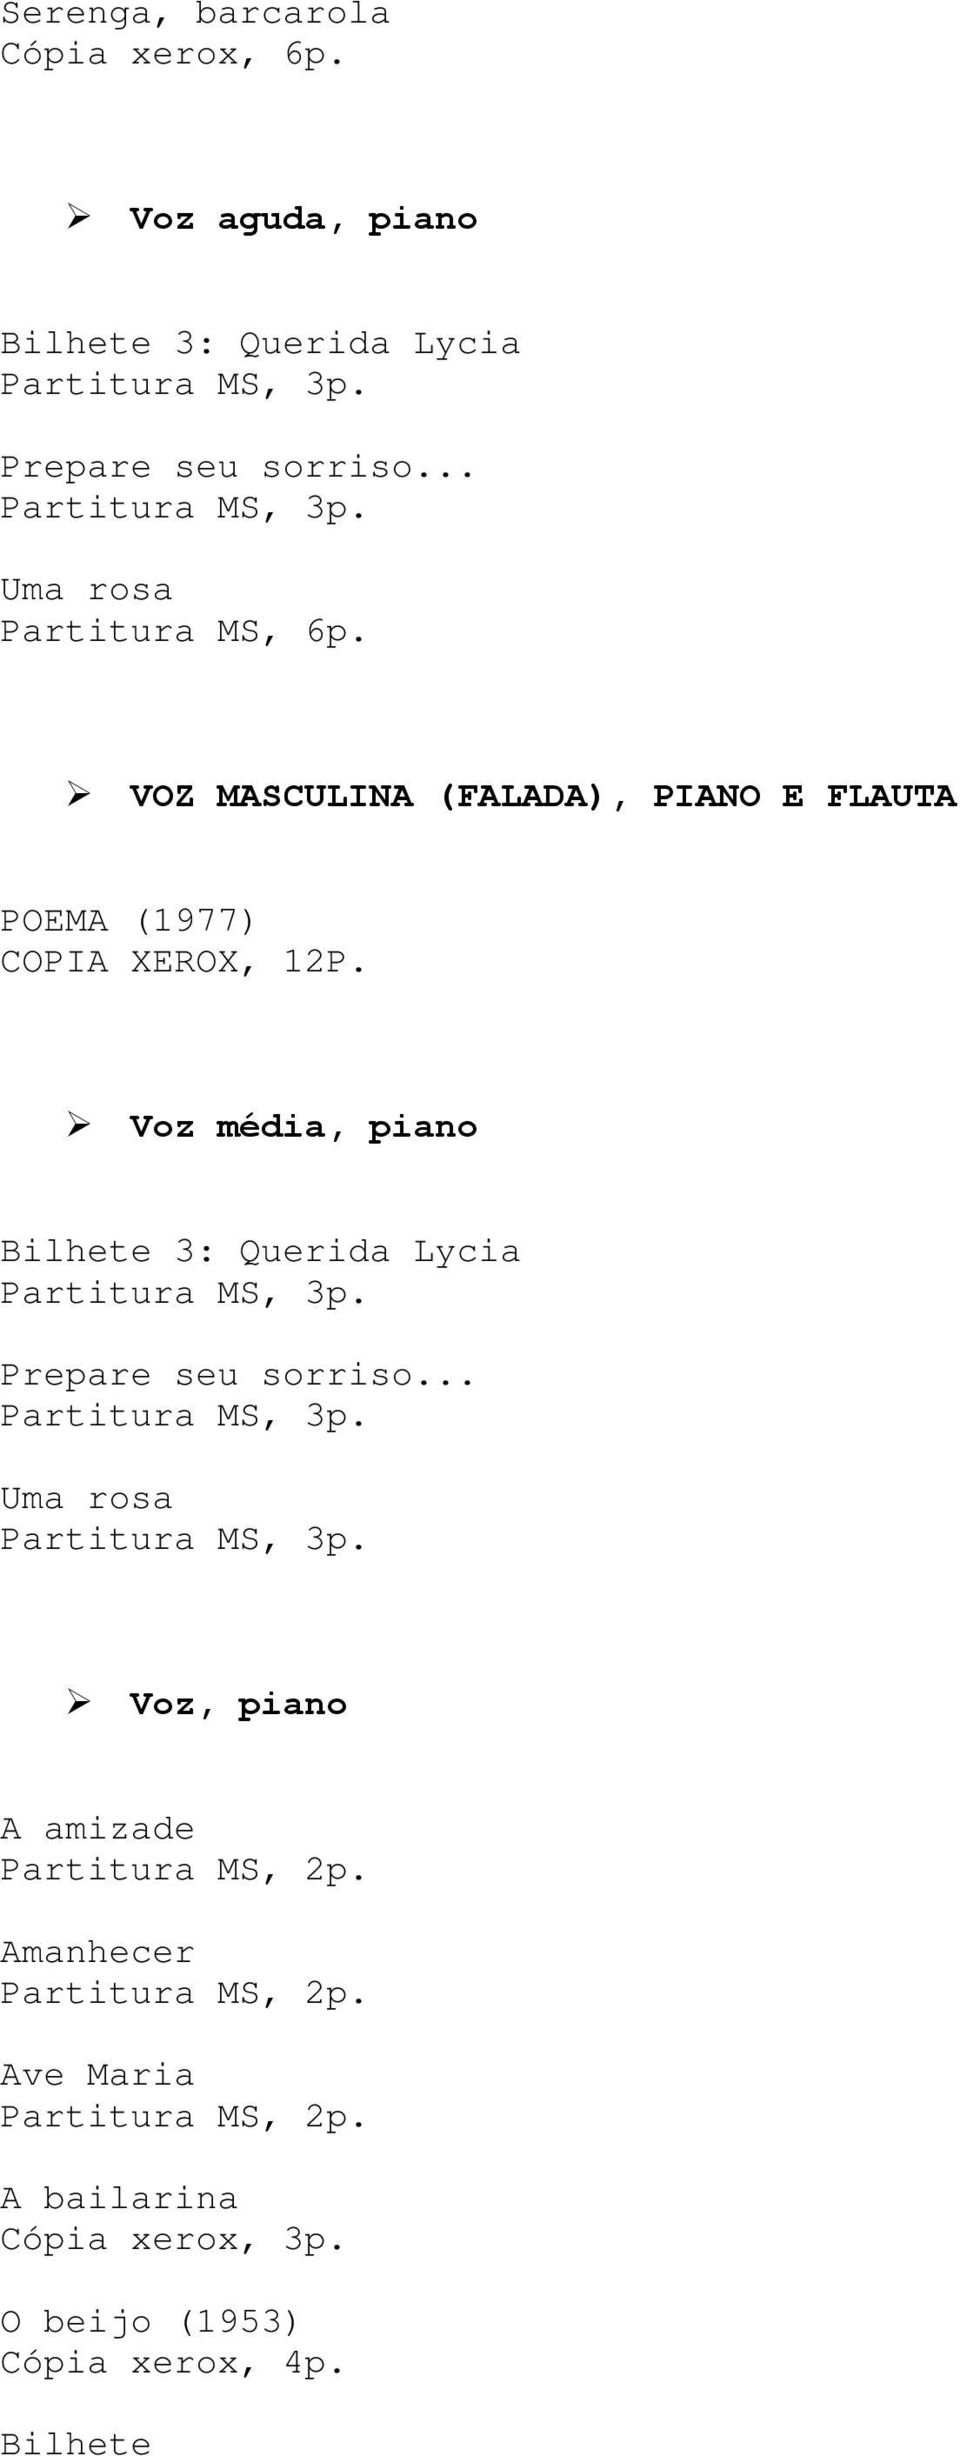 .. Uma rosa VOZ MASCULINA (FALADA), PIANO E FLAUTA POEMA (1977) COPIA XEROX, 12P.